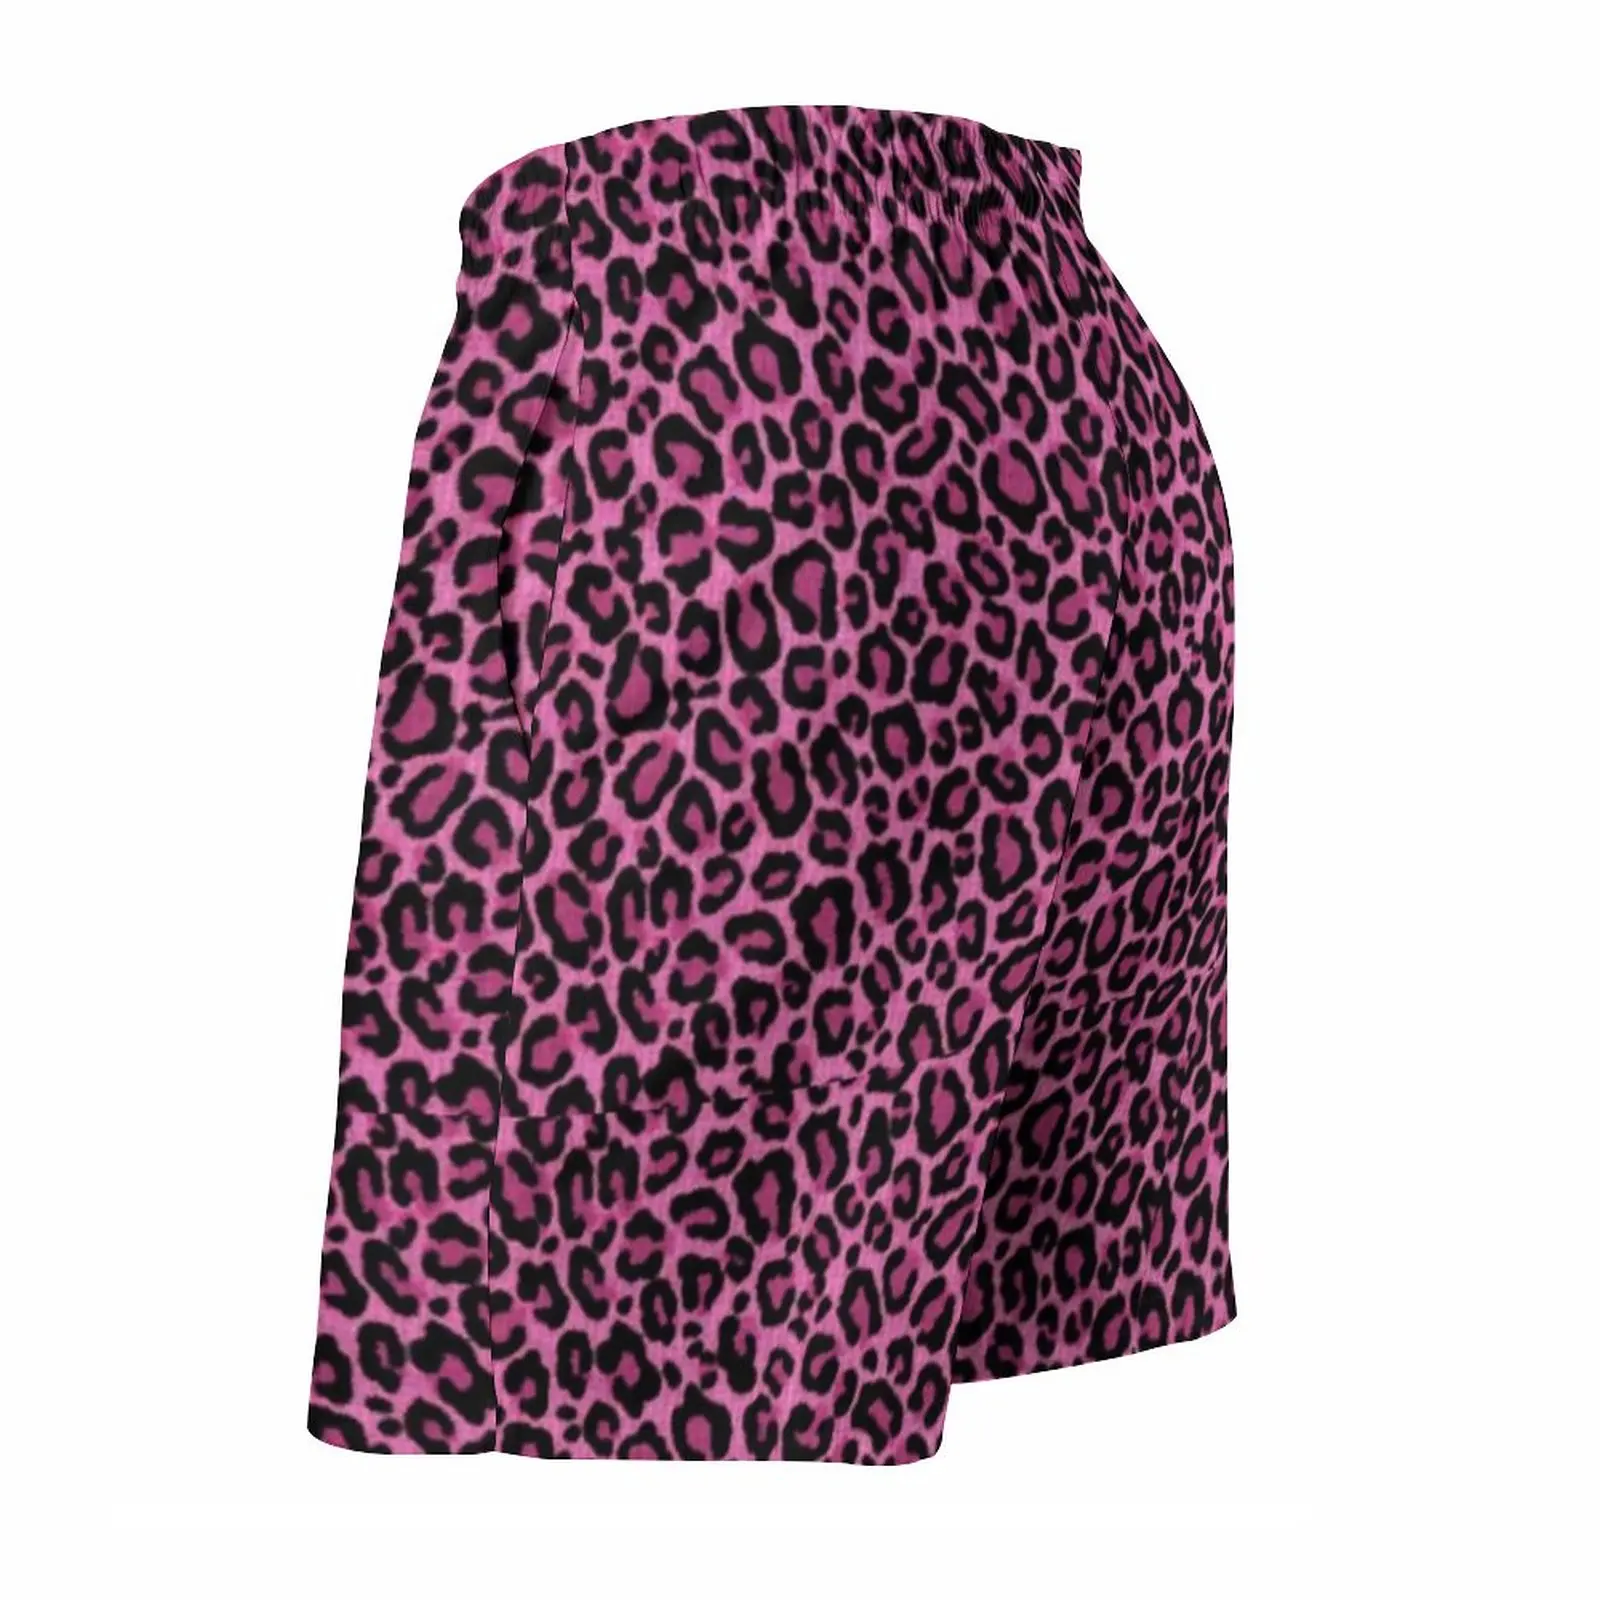 Funky Leopard Print Board Shorts High Quality Pink Black Spots Print Print  Board Short Pants Man Elastic Waist Swim Trunks